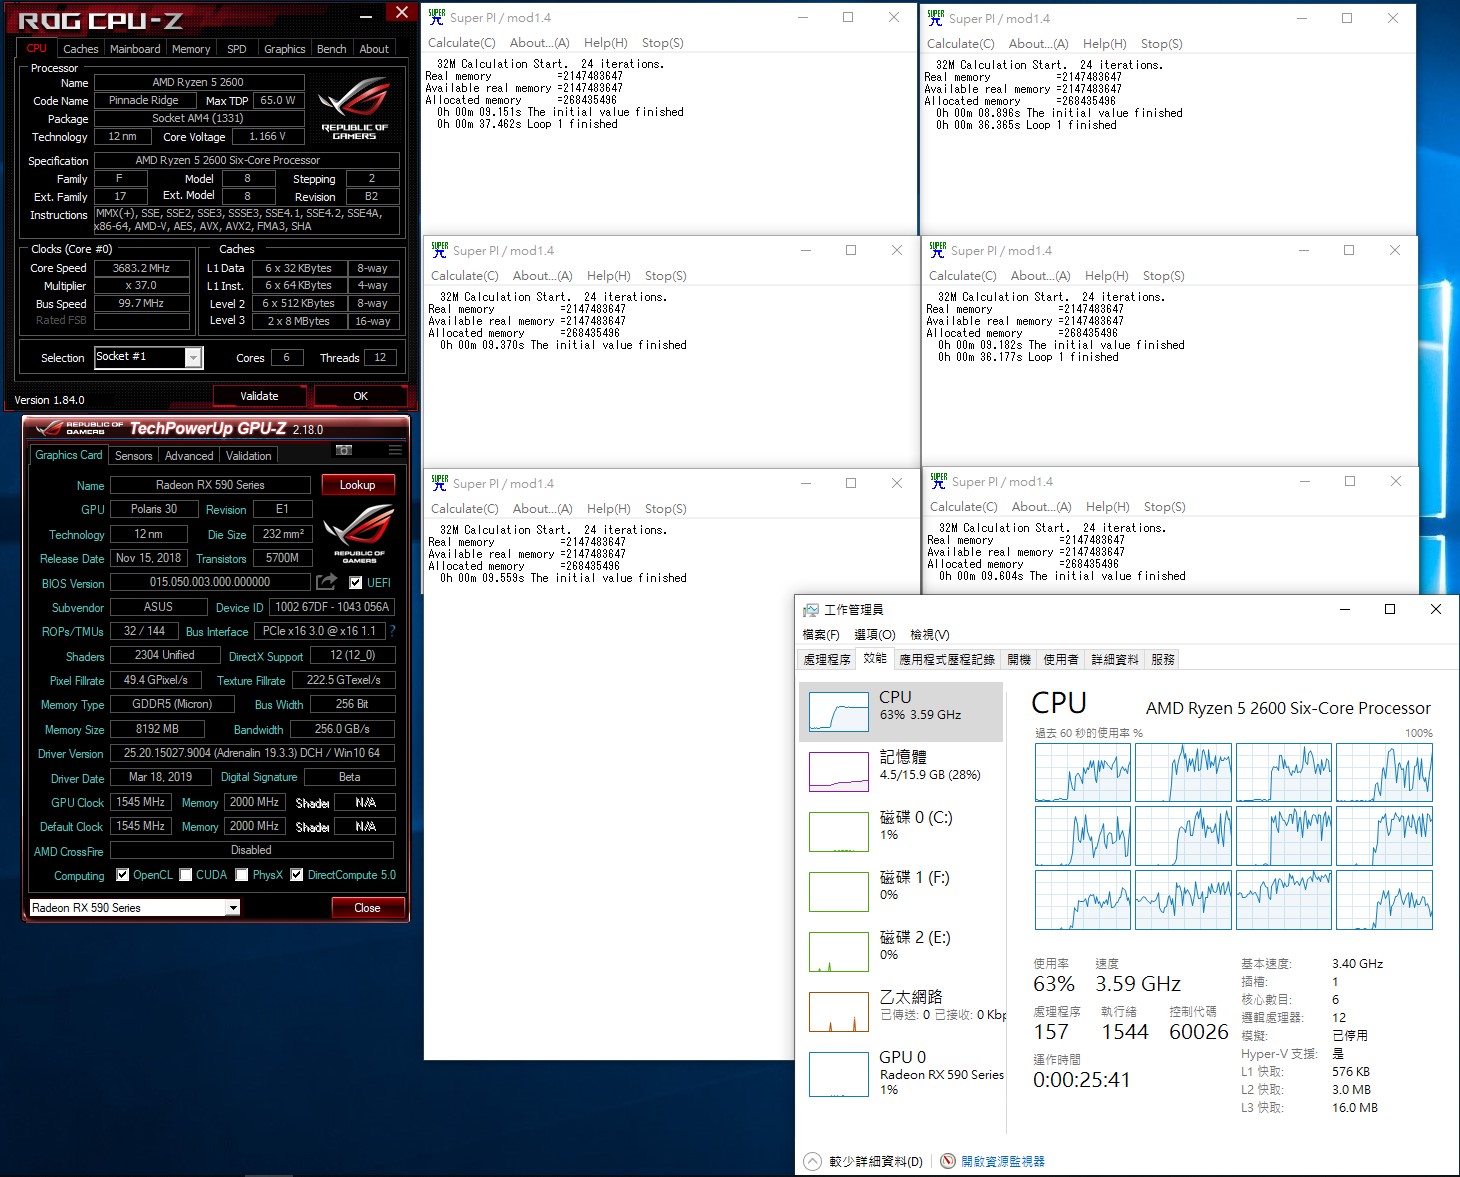 AMD SUPERPI X 6 32M.jpg